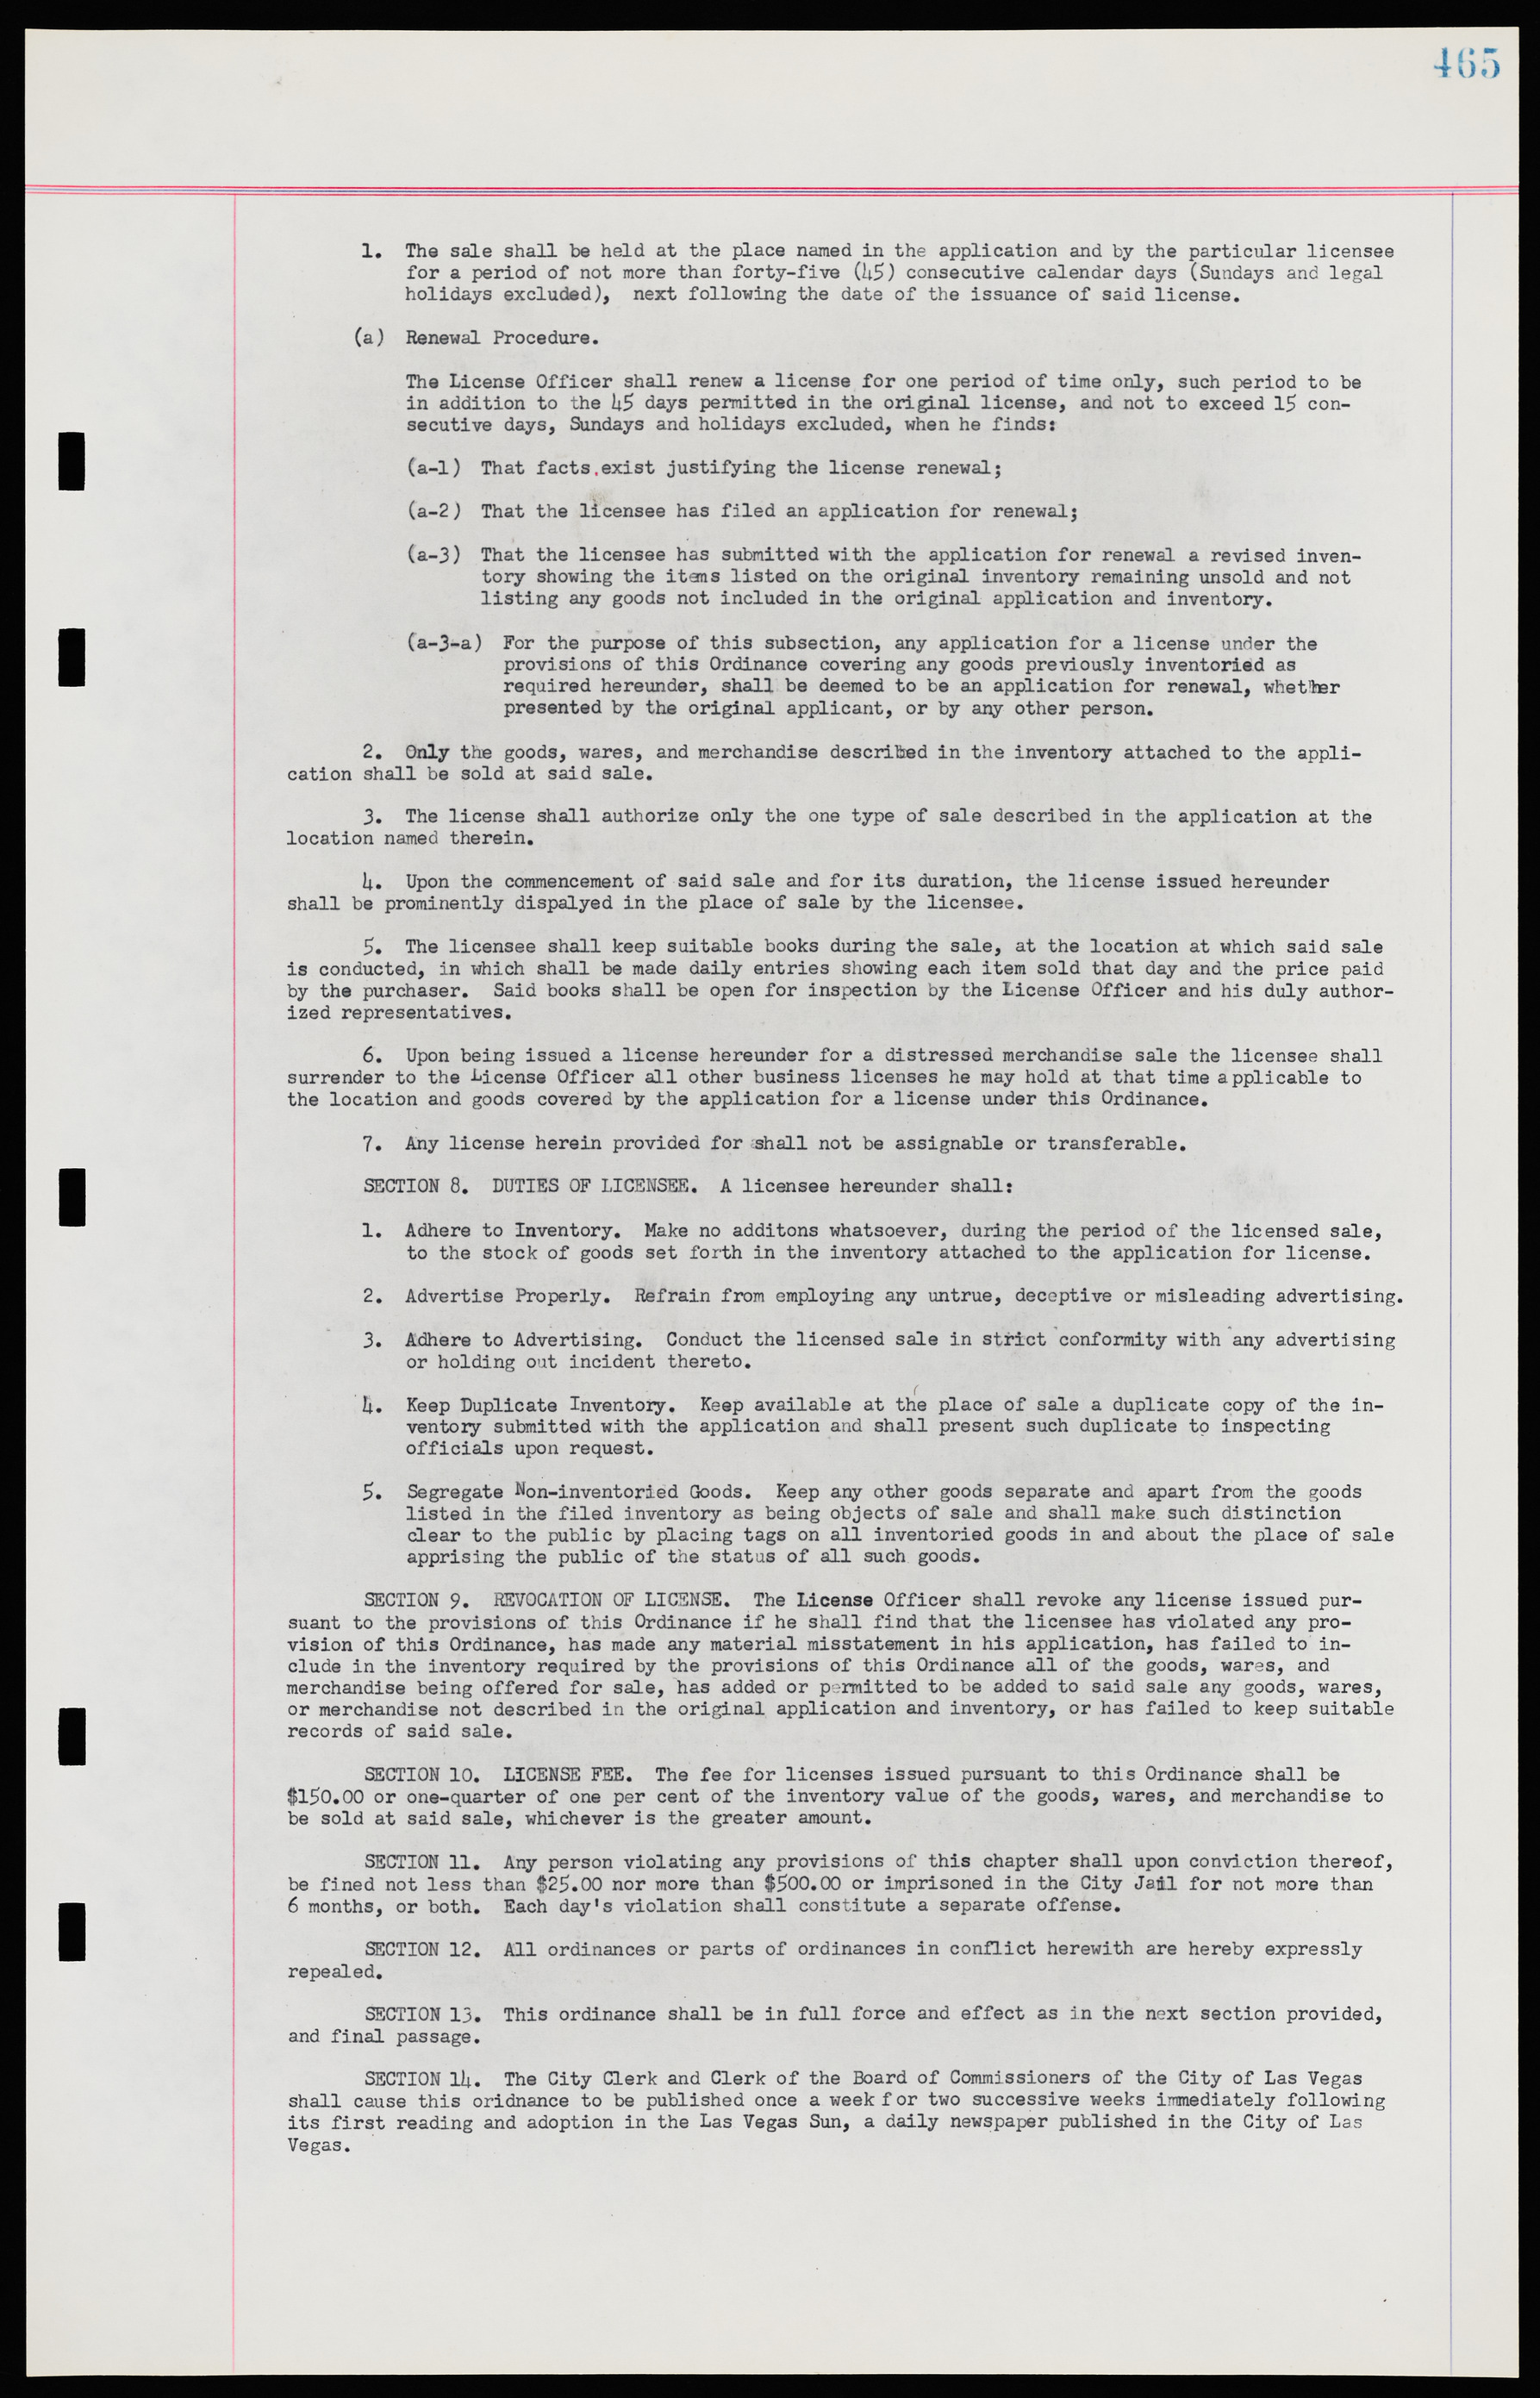 Las Vegas City Ordinances, November 13, 1950 to August 6, 1958, lvc000015-473